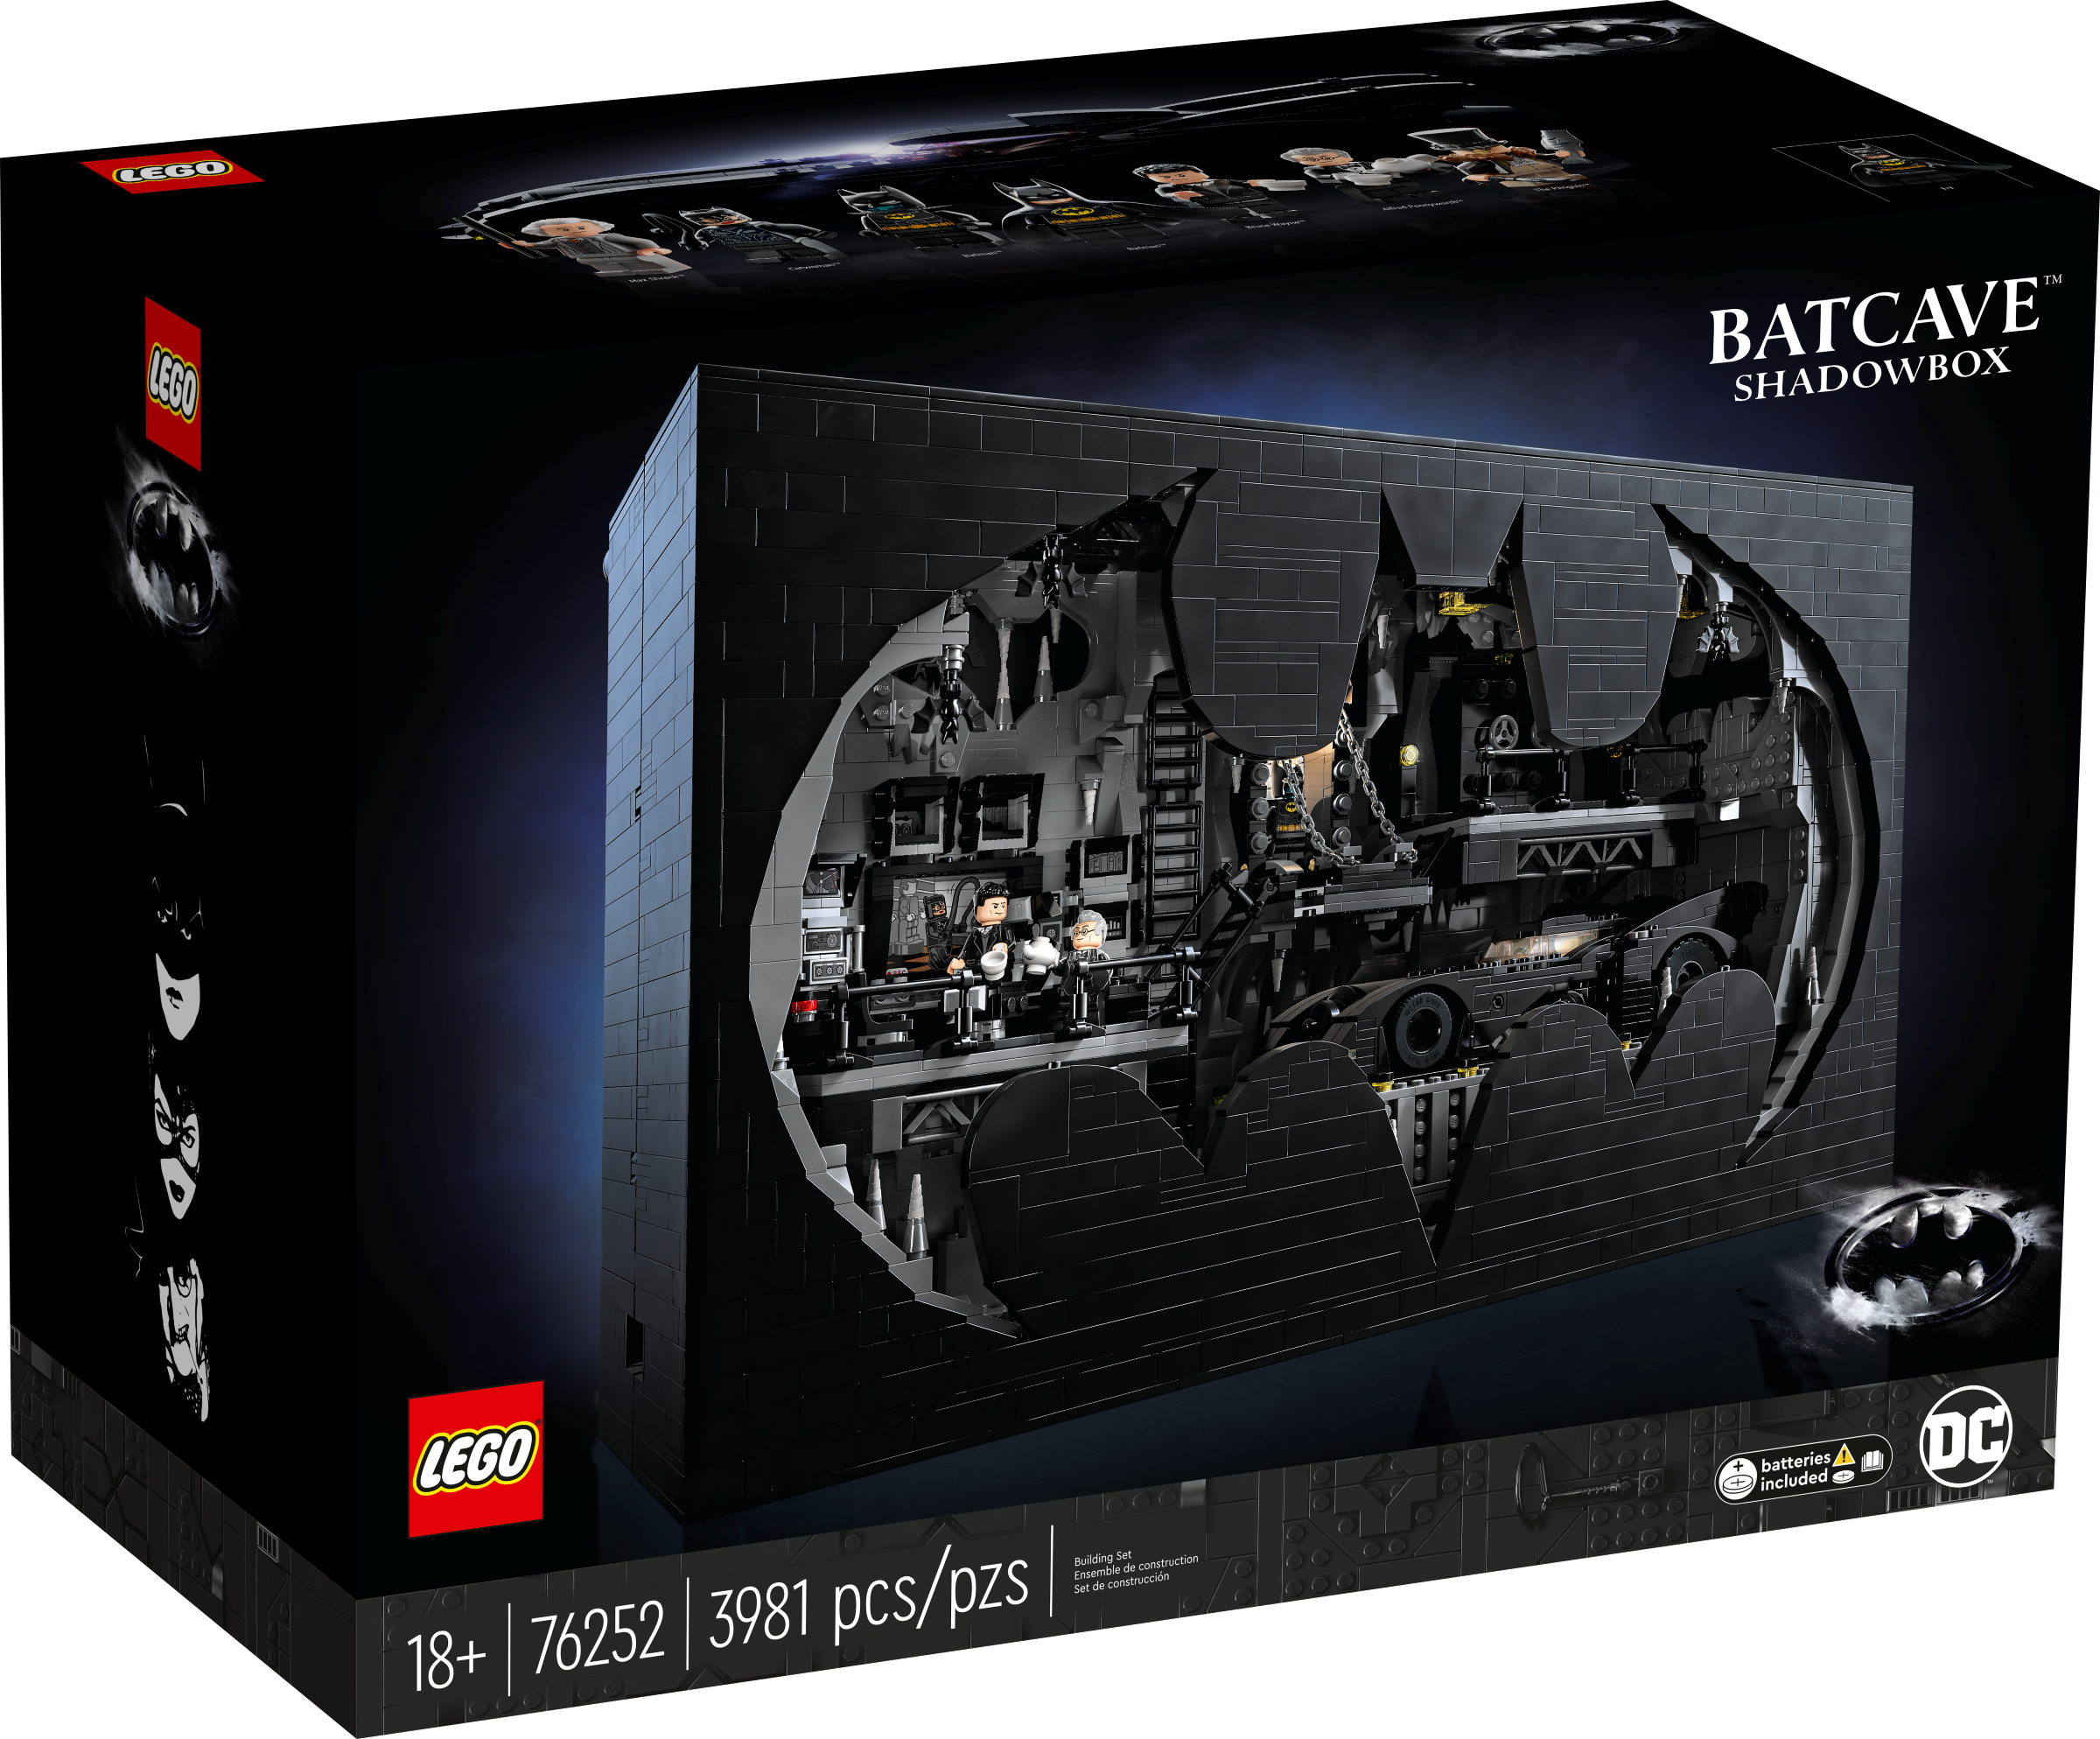 Disguise Costumes 23730K Batman Lego Movie Deluxe Costume, Black, Medium  (7-8), Building Sets -  Canada